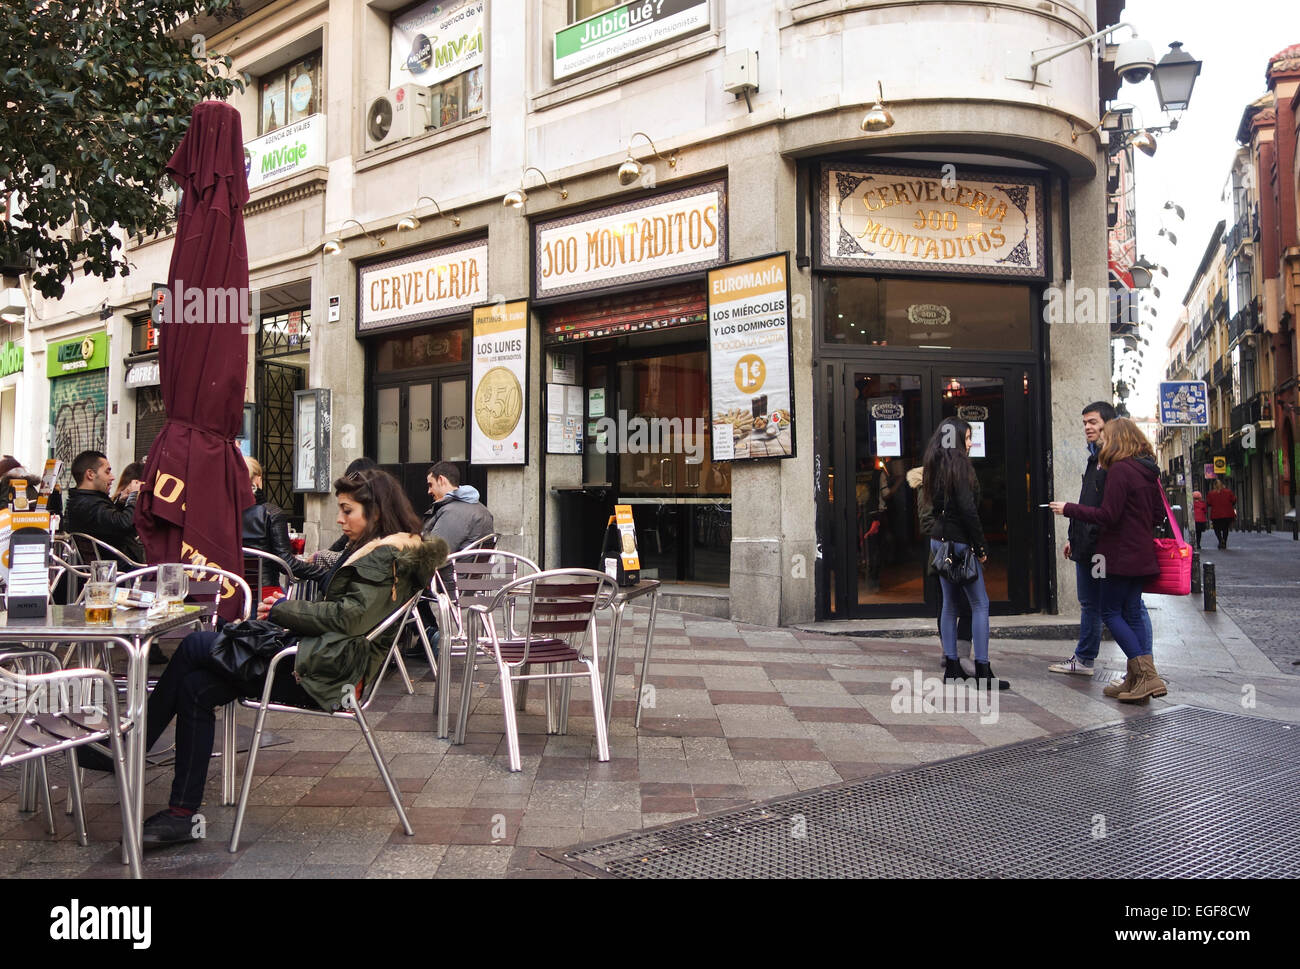 Cerveceria 100 montaditos, Tapas bar chain, terrace at calle de la montera, Madrid, Spain. Stock Photo